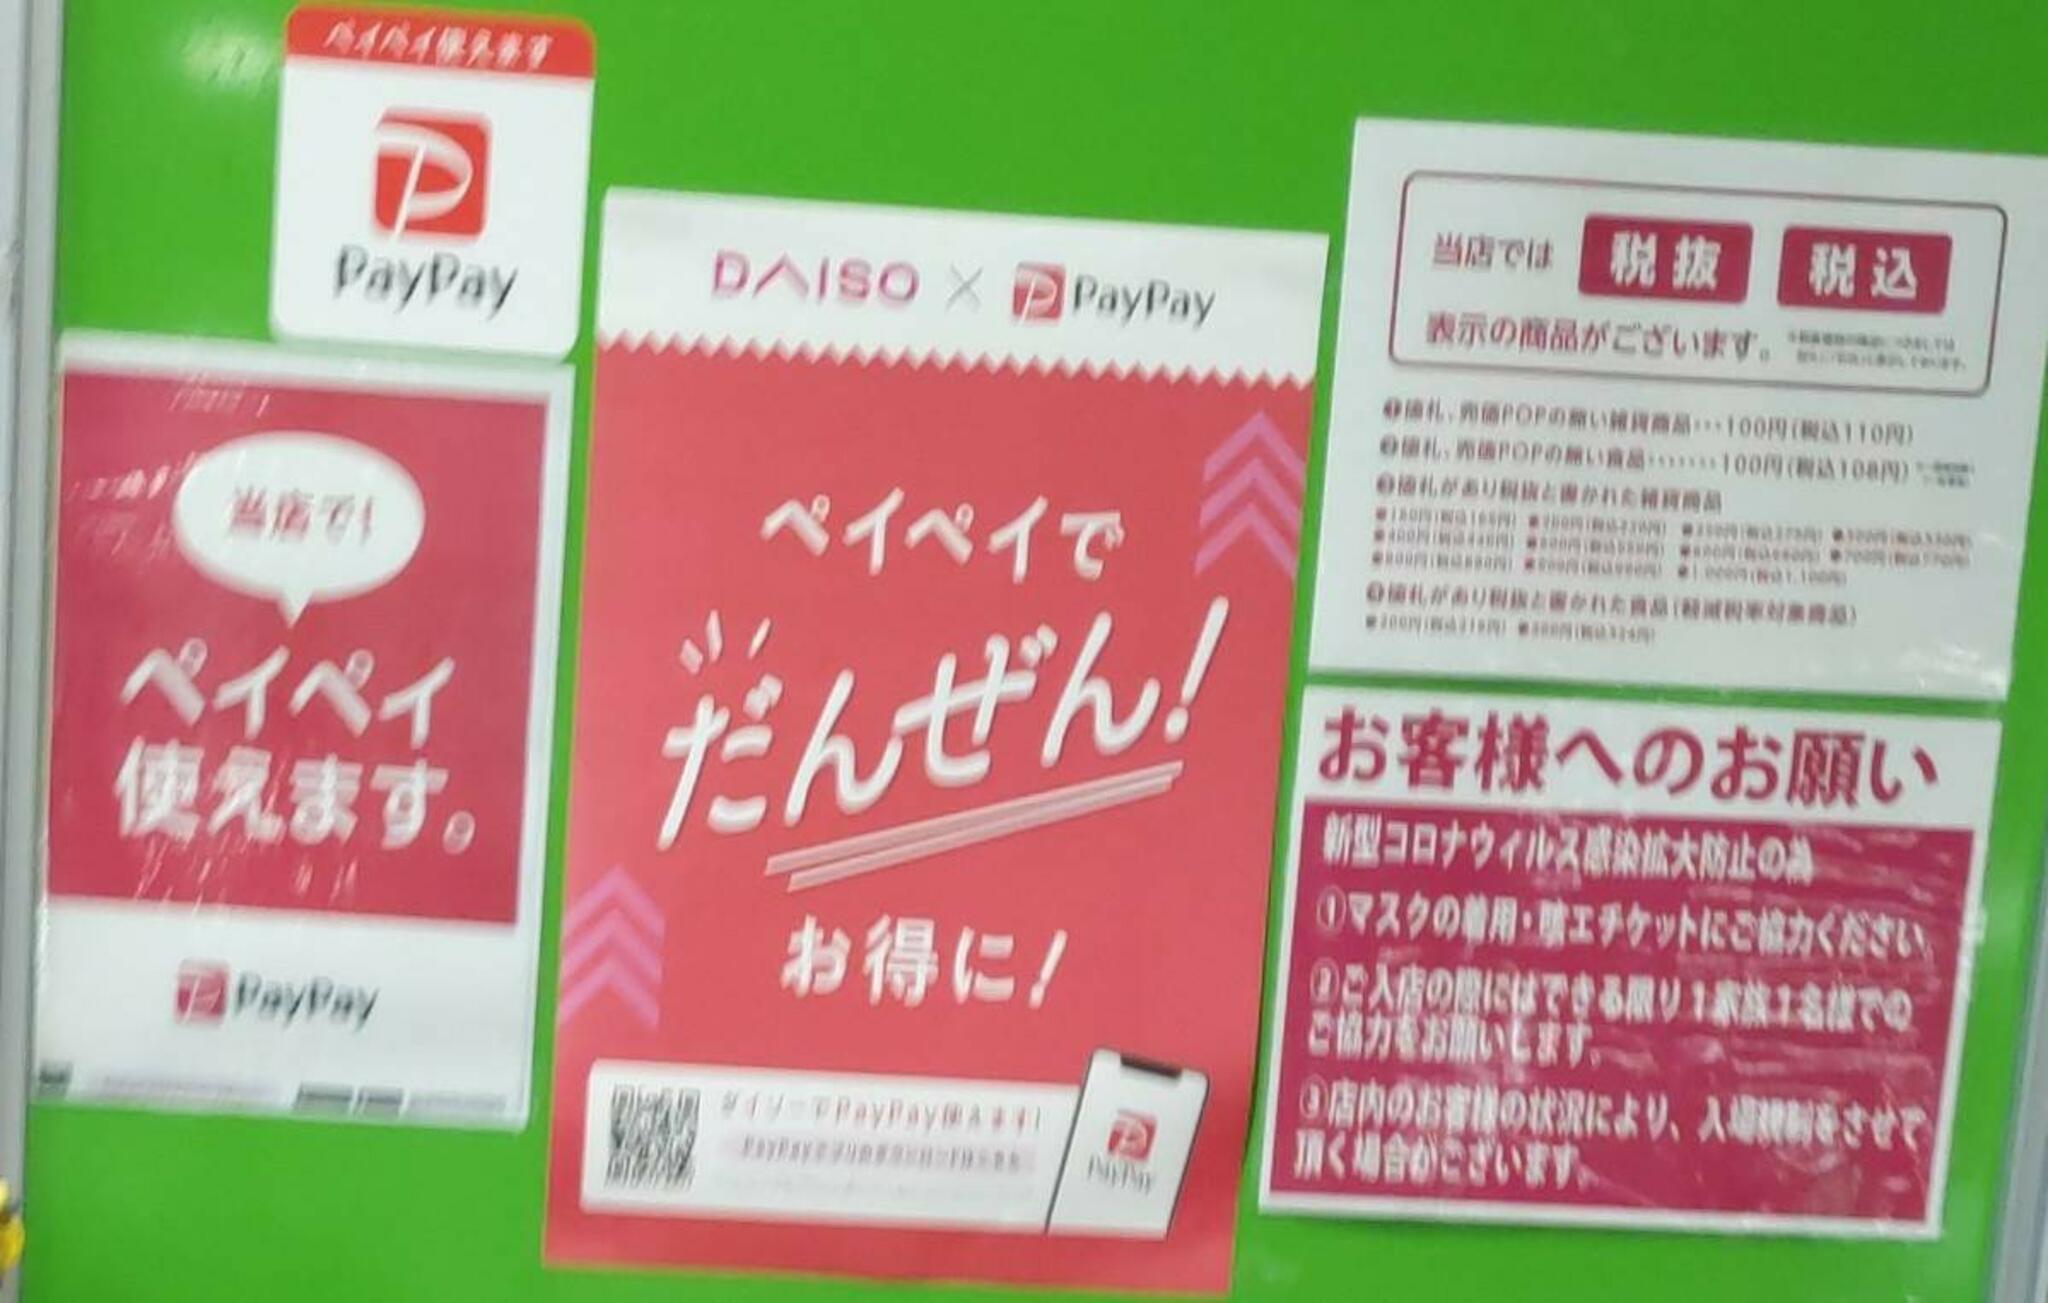 DAISO ラパーク金沢店の代表写真3